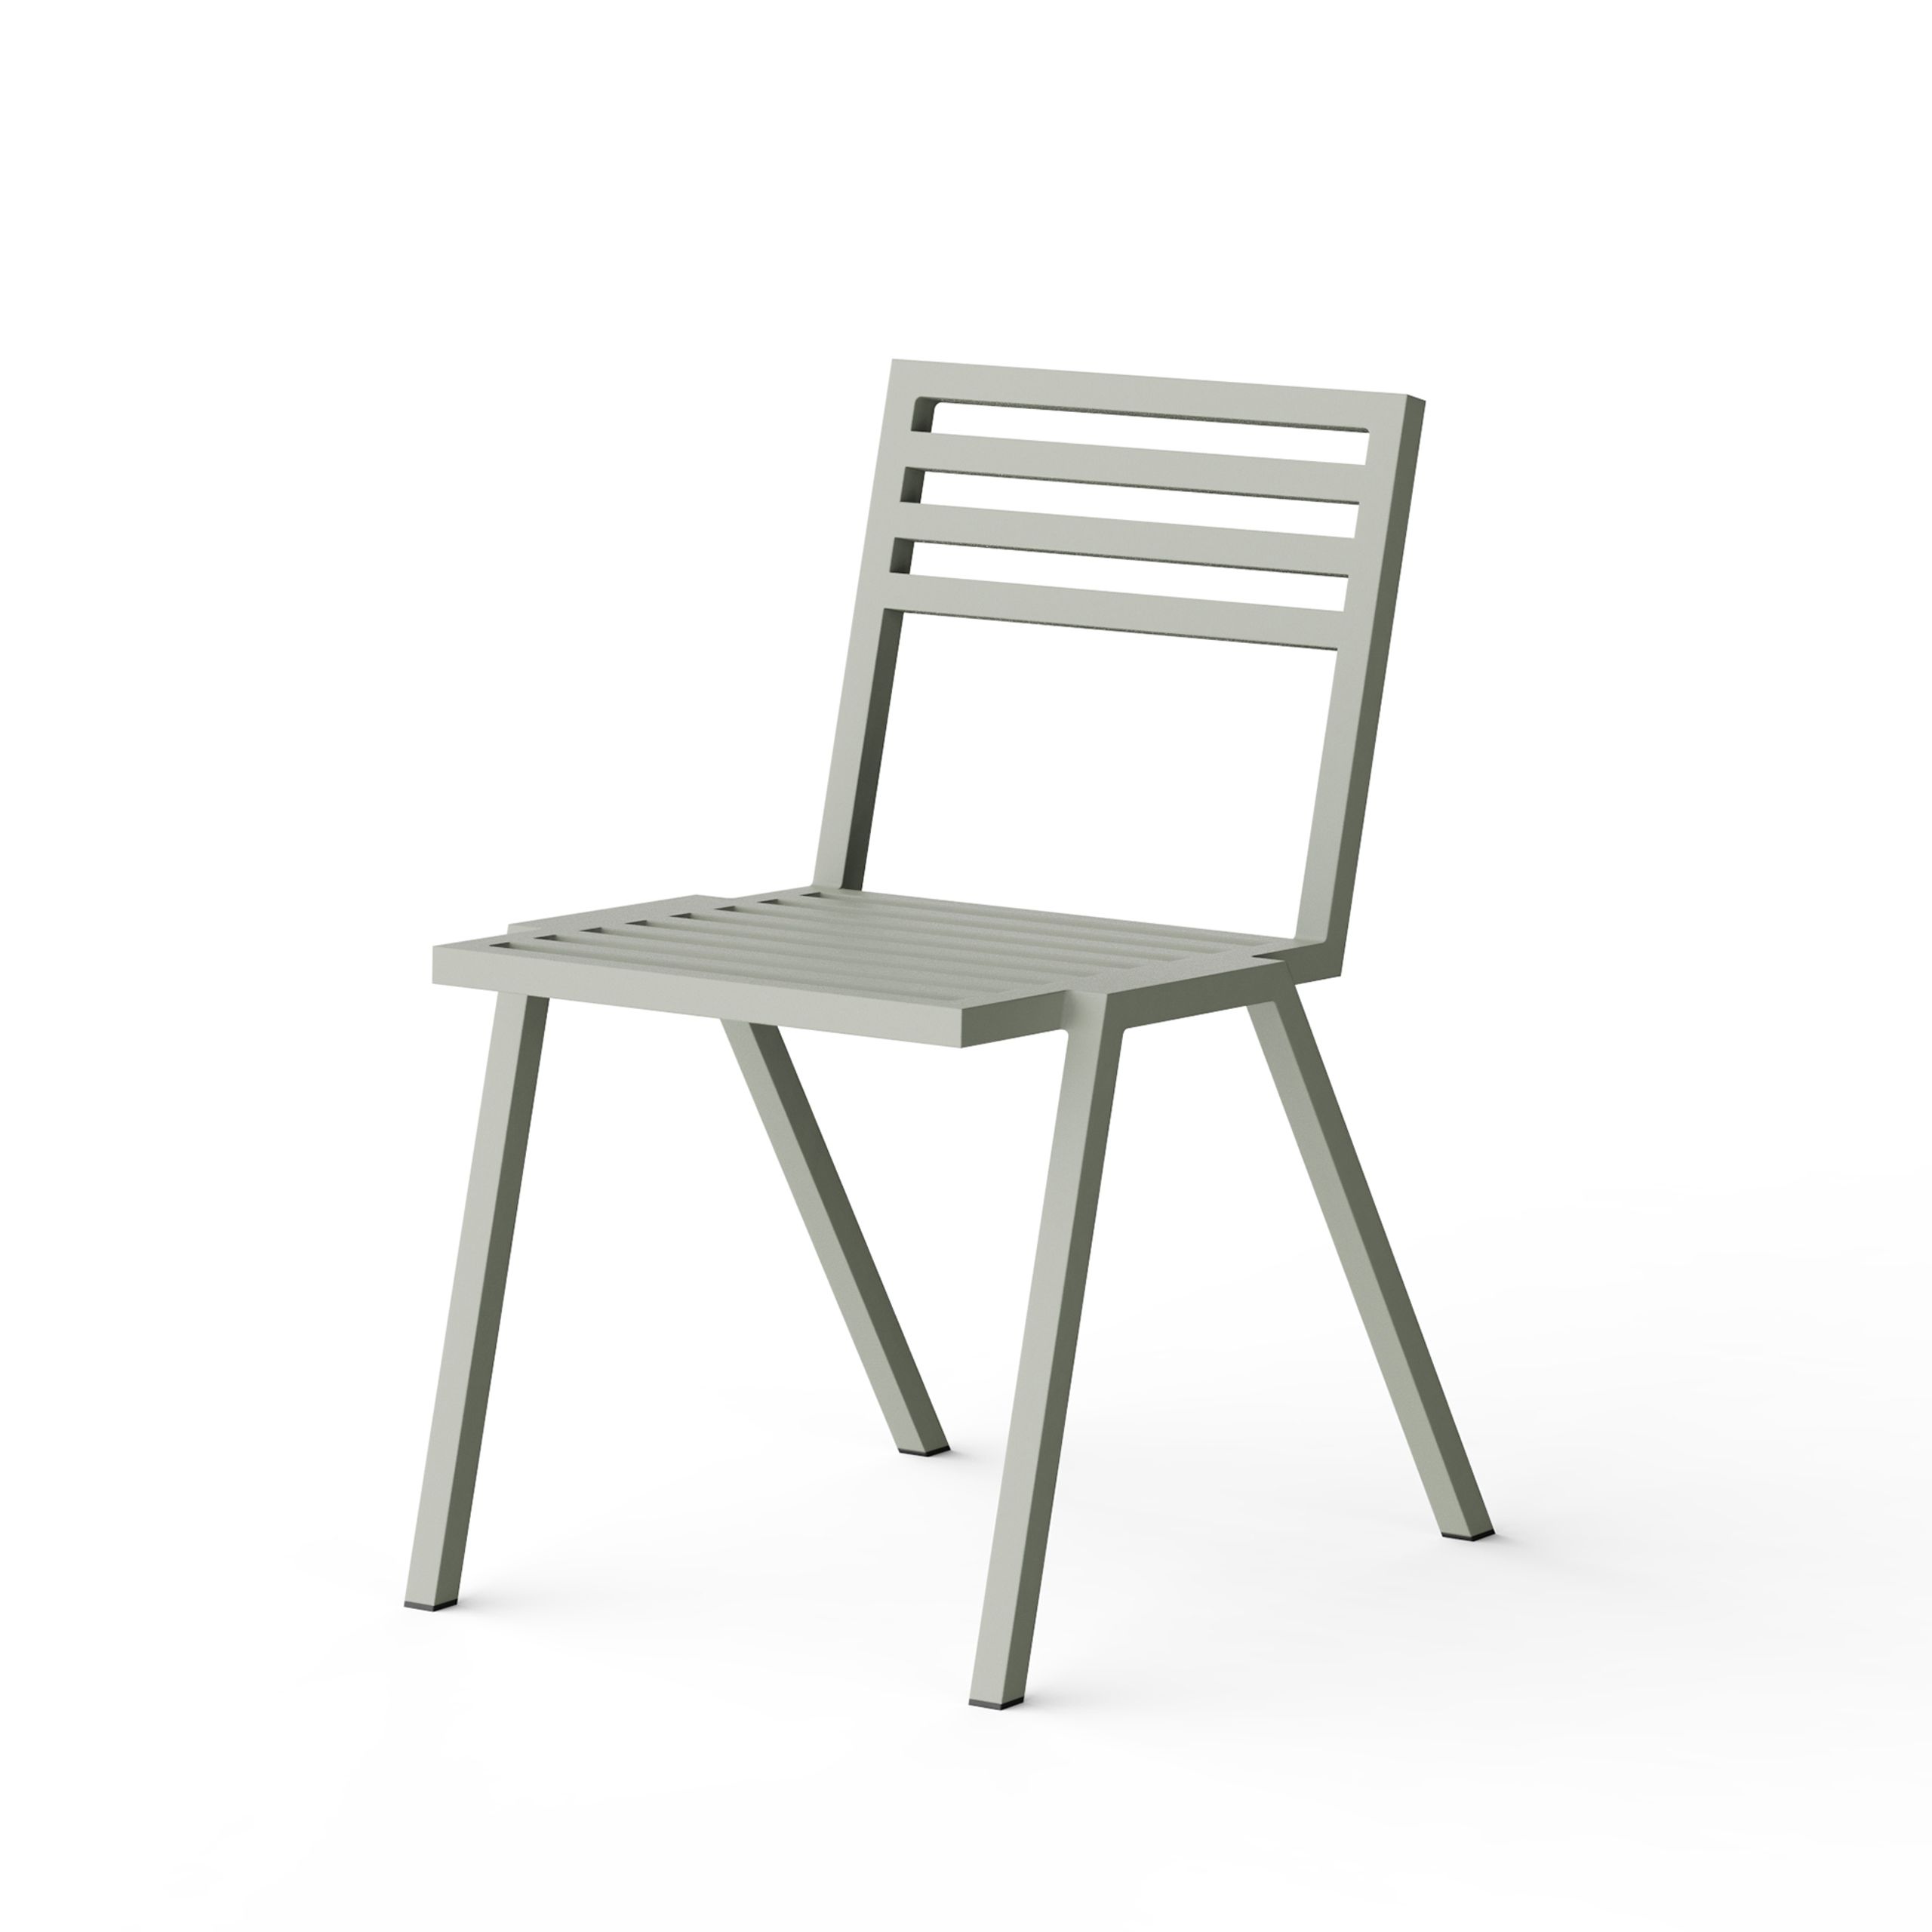 NINE - Havestol - 19 Outdoors - Stacking Chair (2 Pcs/box) - Grey